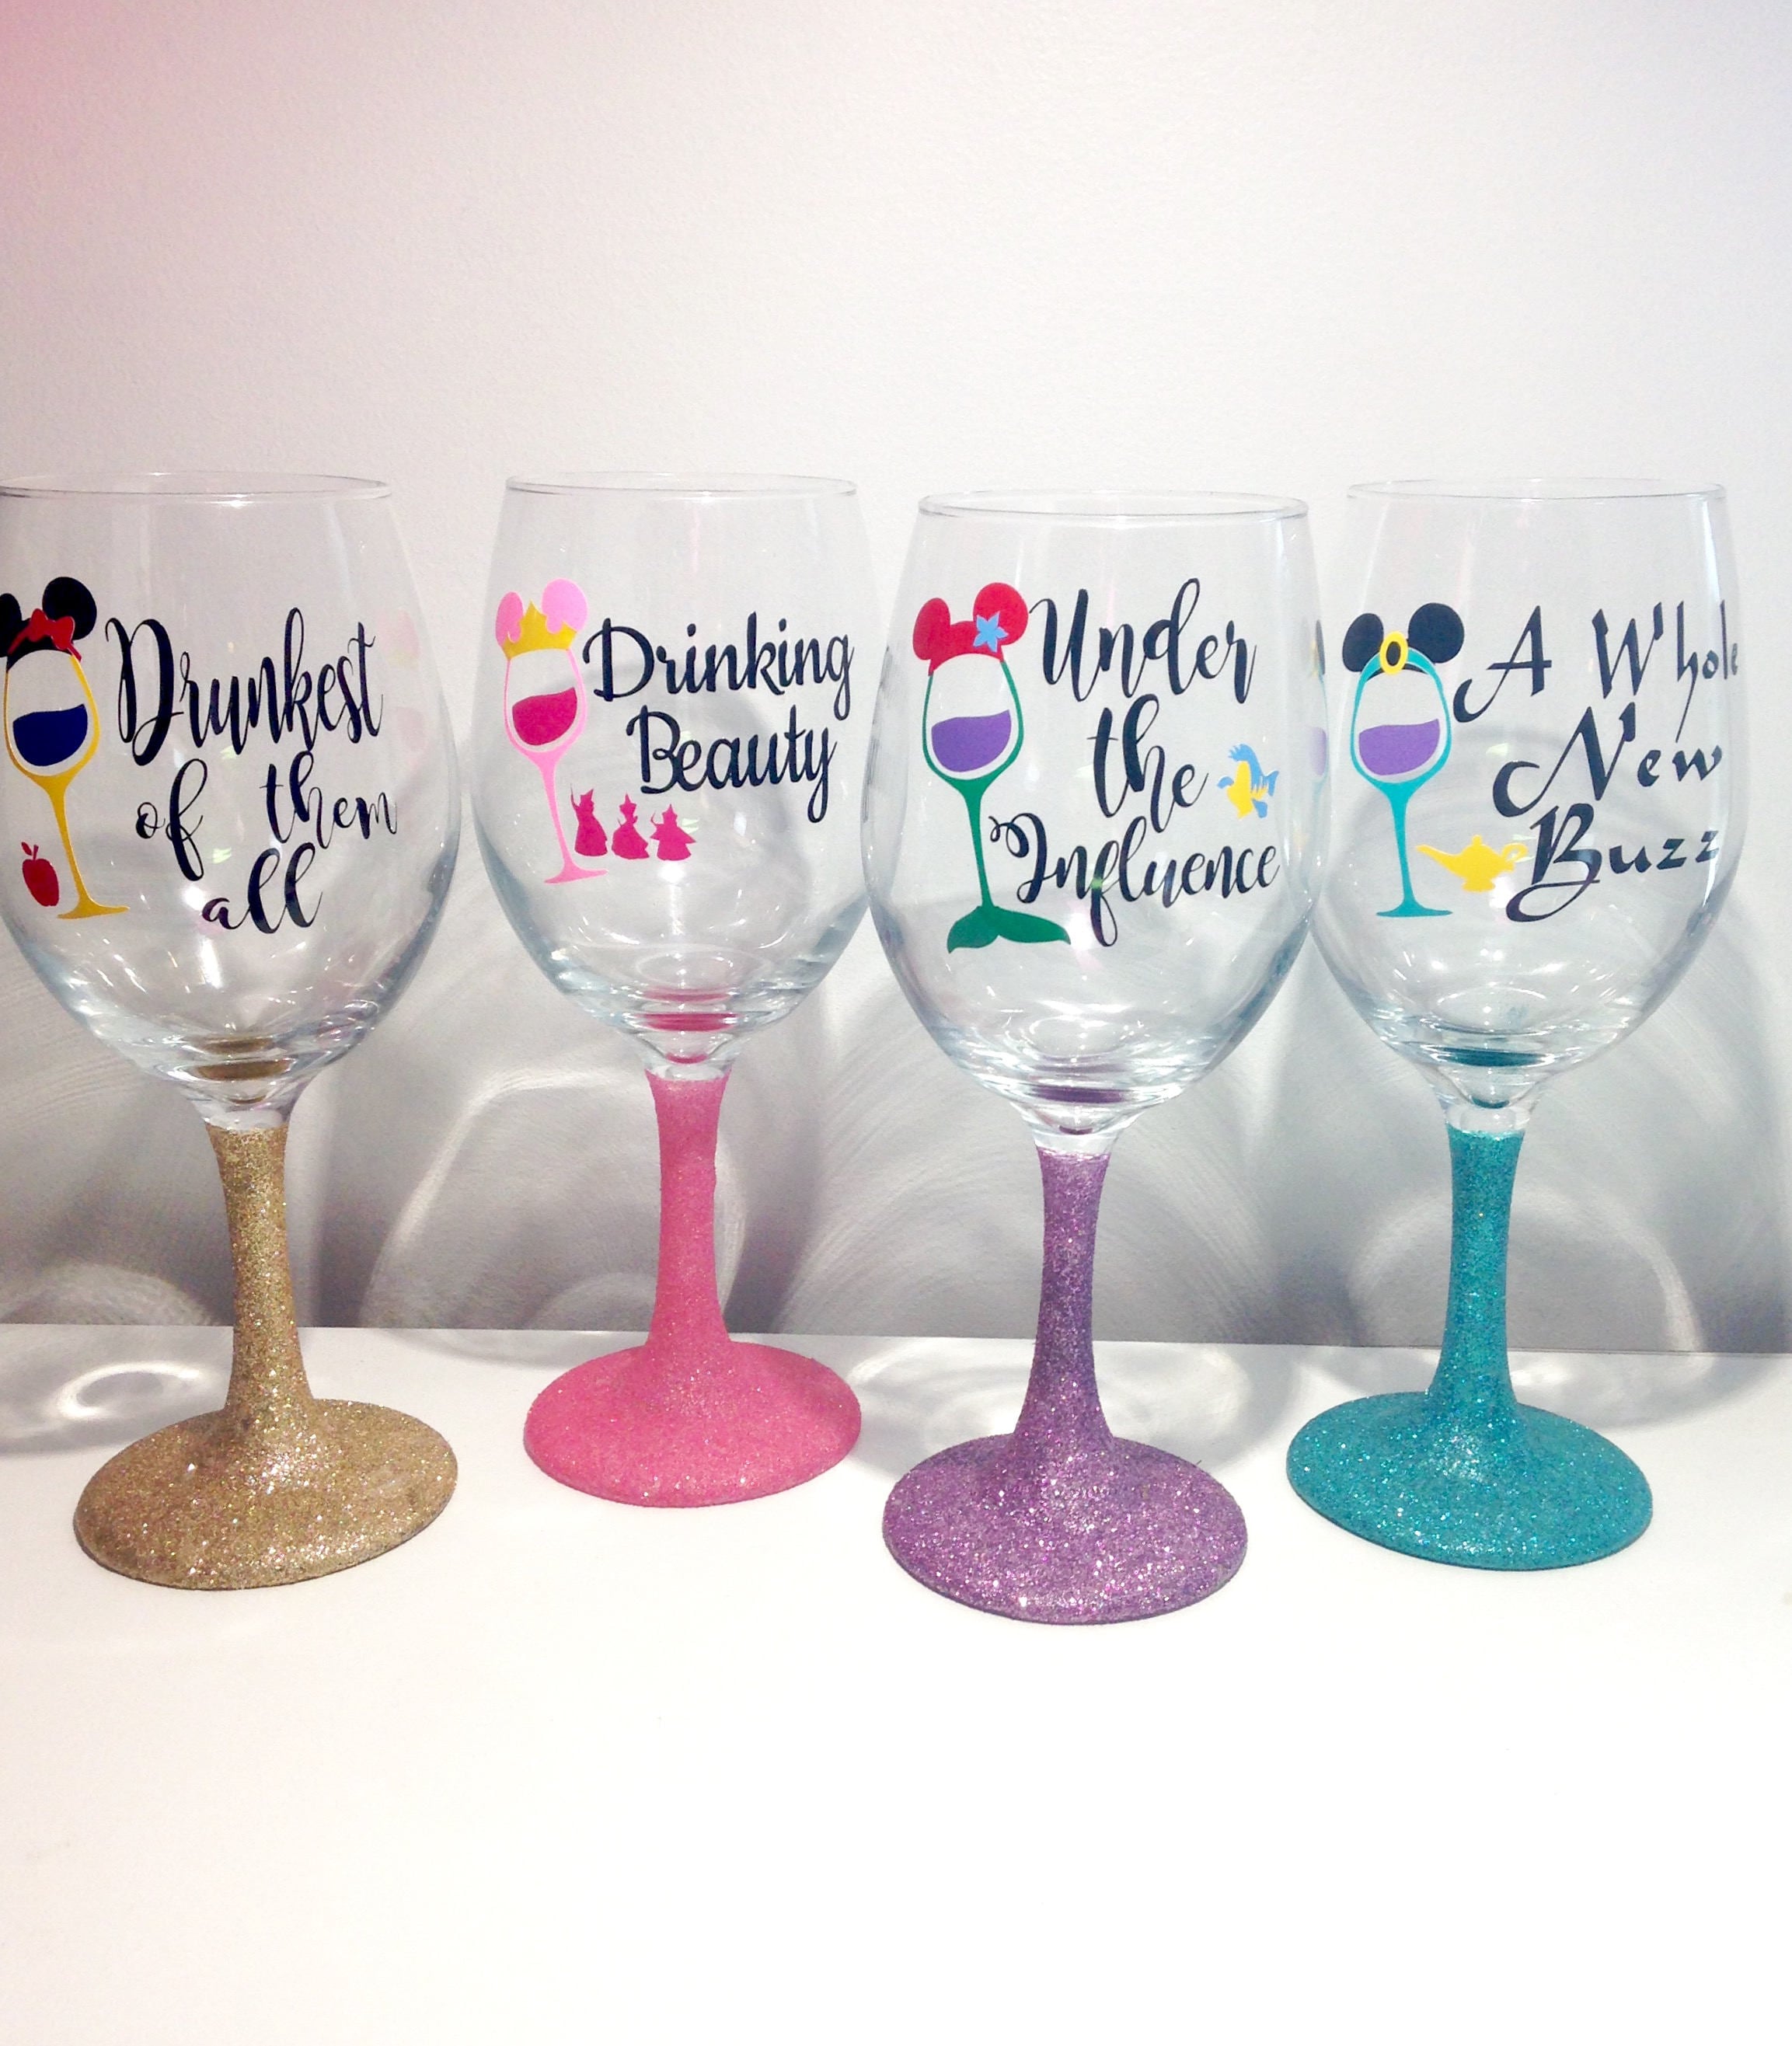 Disney princess inspired wine glasses. Drinking beauty